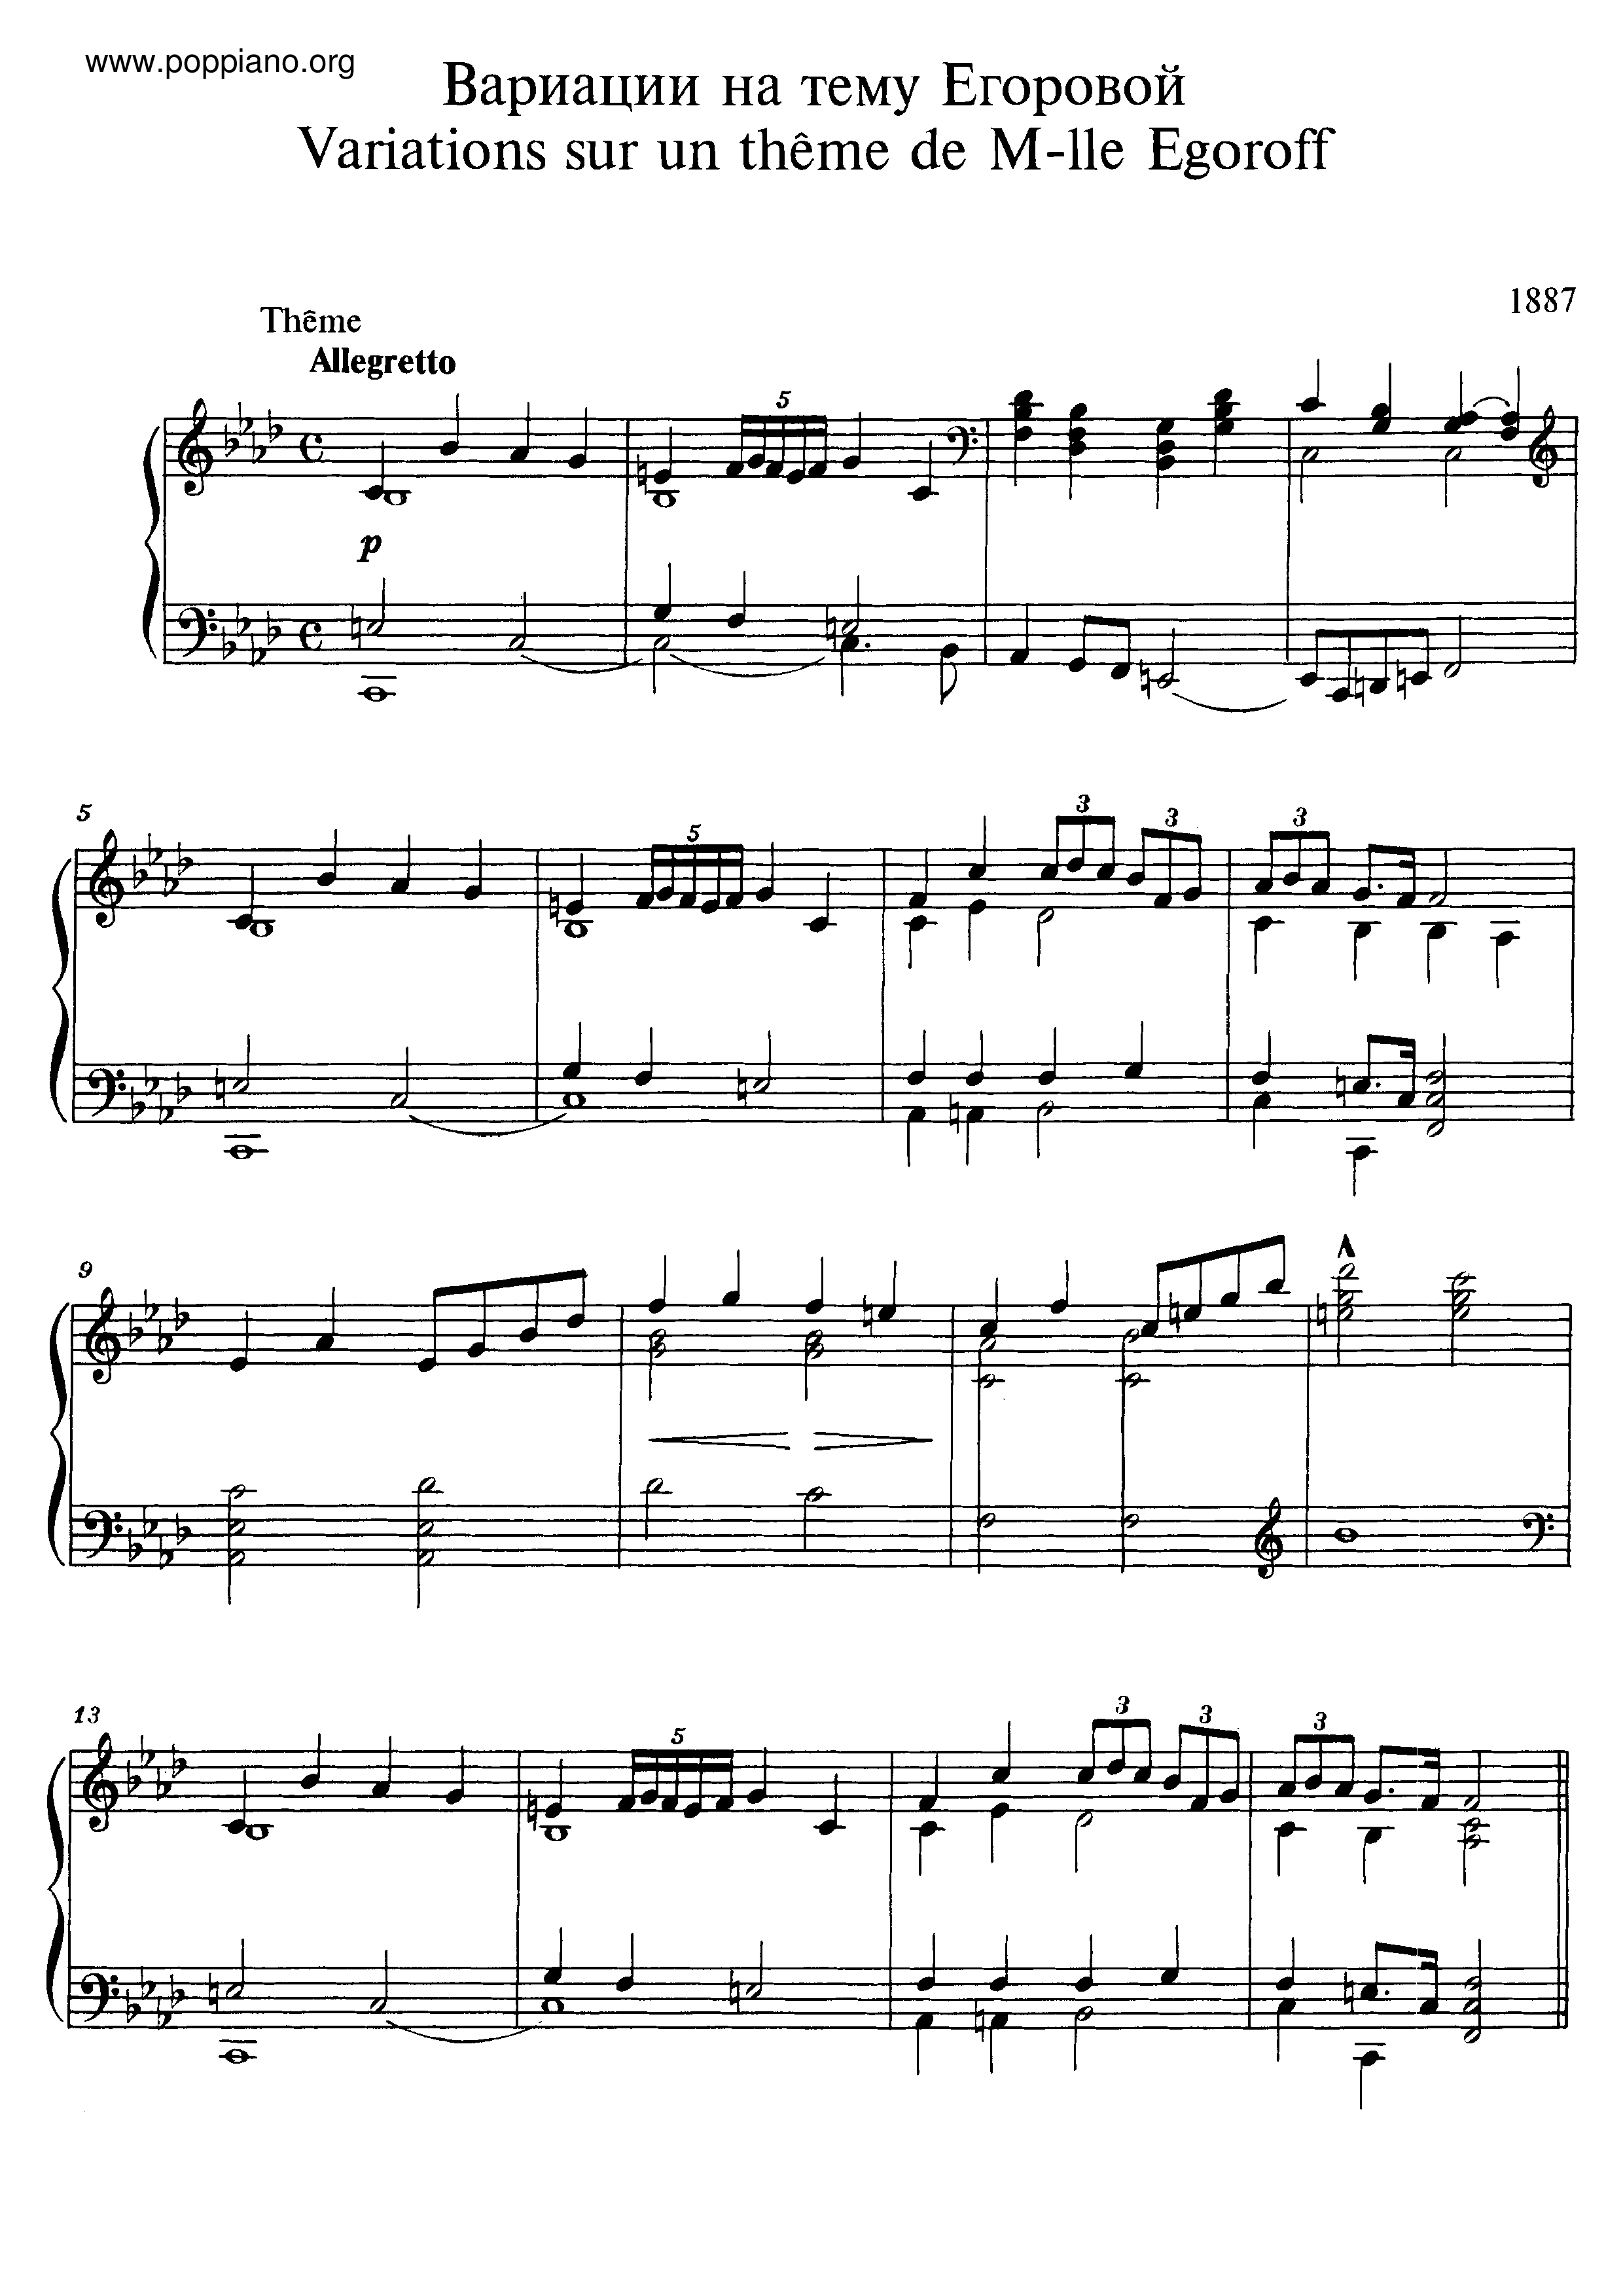 Egoroff Variations Score